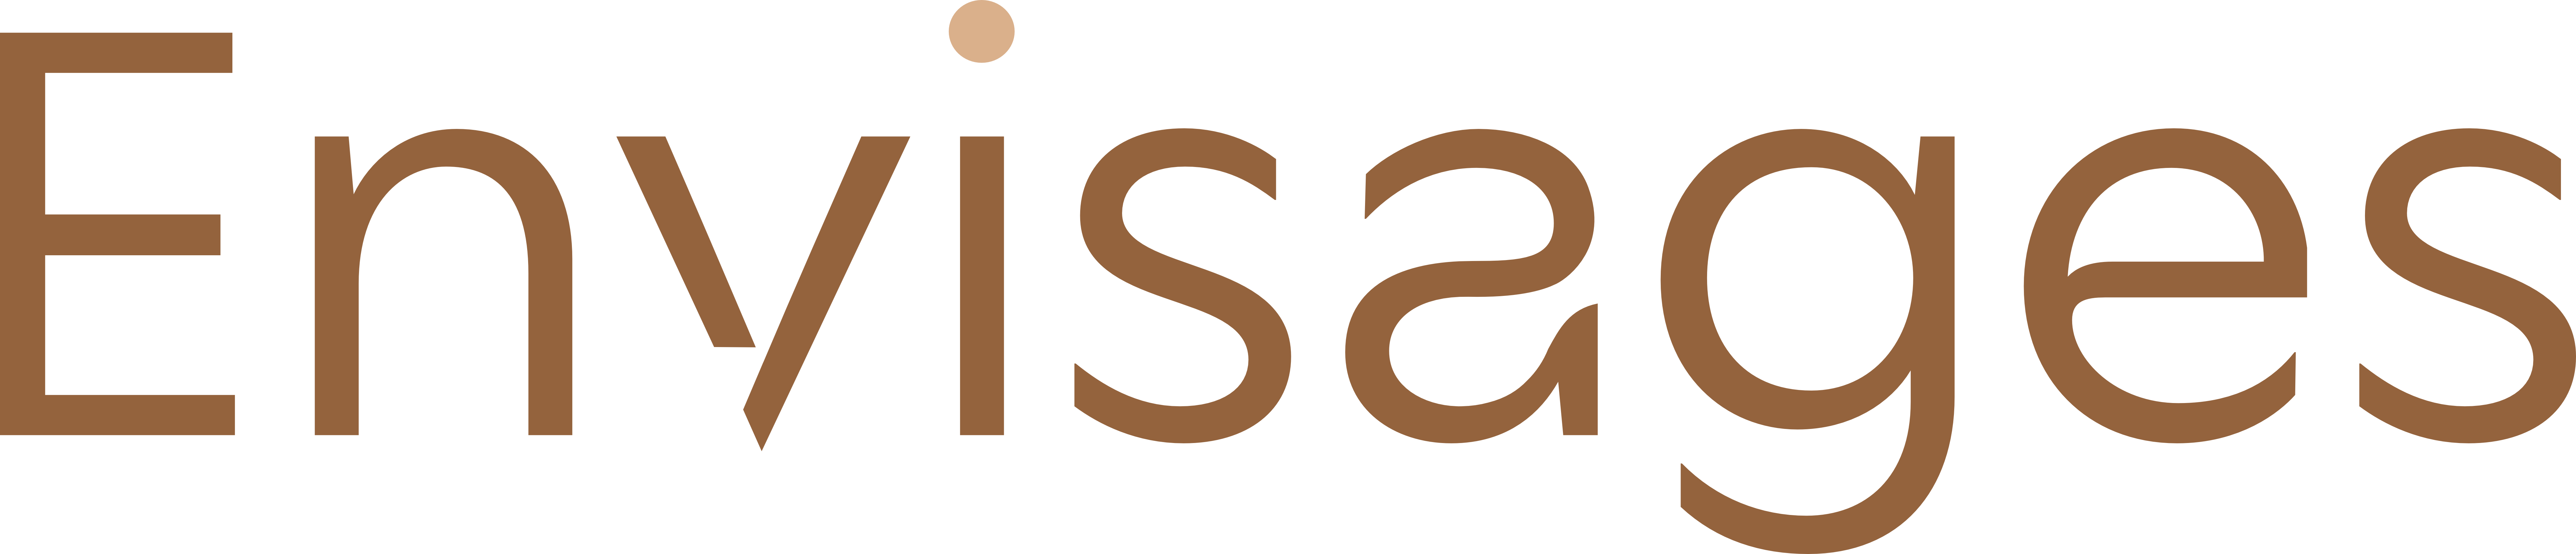 ENVISAGES - logo texte marron